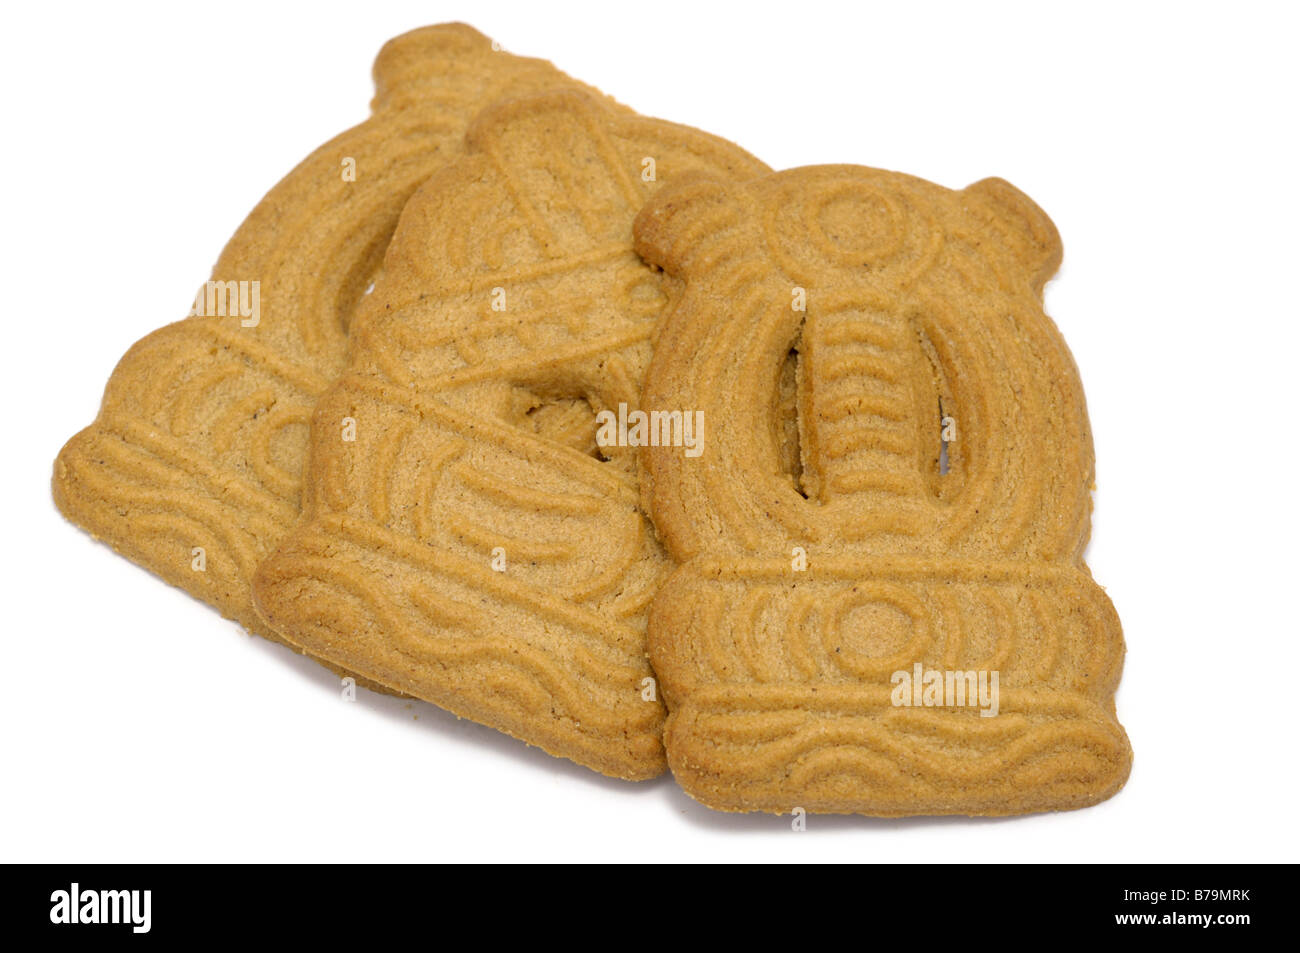 Spekulatius, Speculaas, Spéculoos, (Spice Biscuits/Cookies) Stock Photo